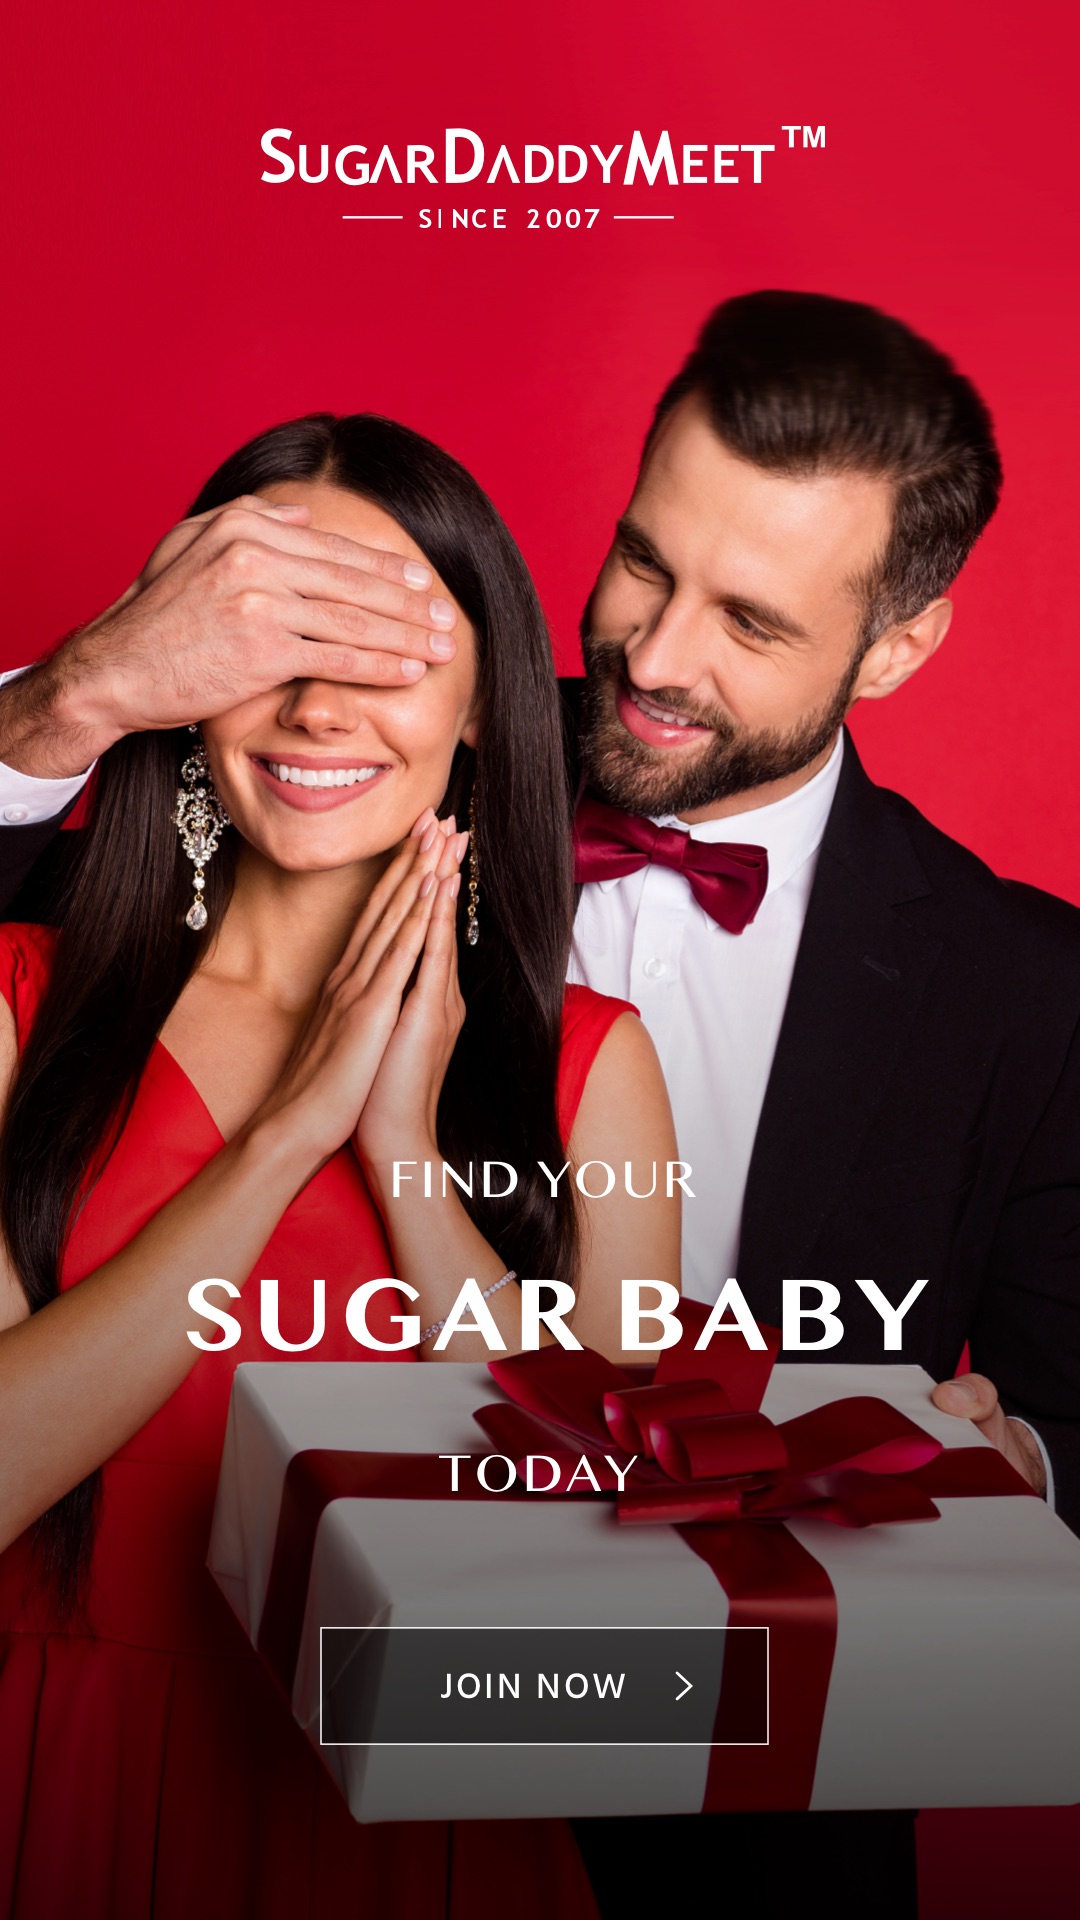 SugarDaddyMeet - meet wealthy sugar daddies and young beautiful sugar babies!